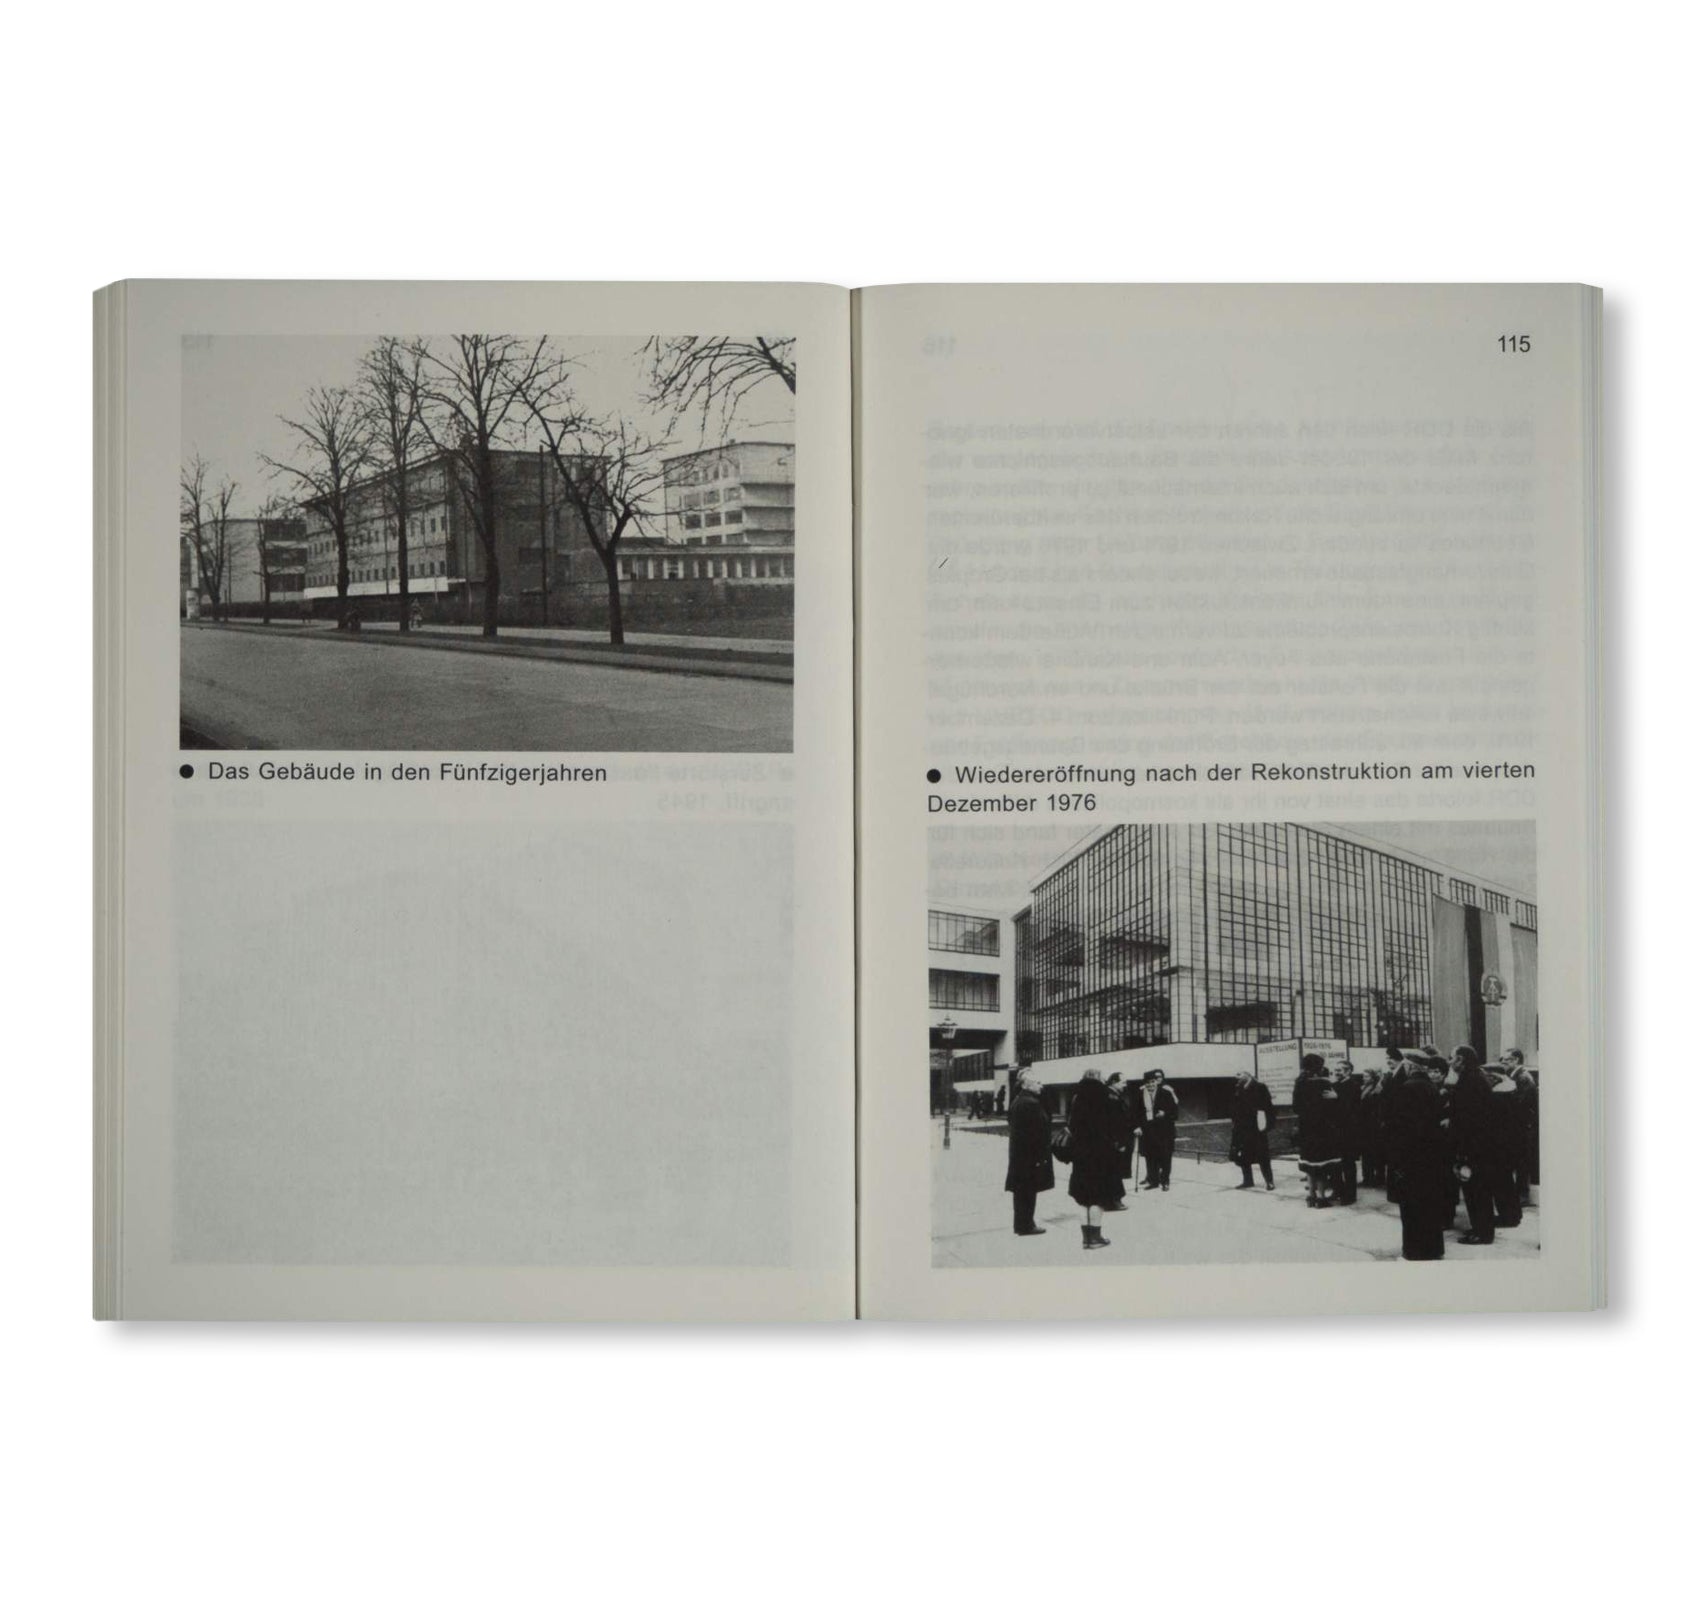 DAS BAUHAUSGEBÄUDE IN DESSAU / Bauhaus Paperback 5 by Christin Irrgang, Ingolf Kern, Stiftung Bauhaus Dessau [GERMAN EDITION]